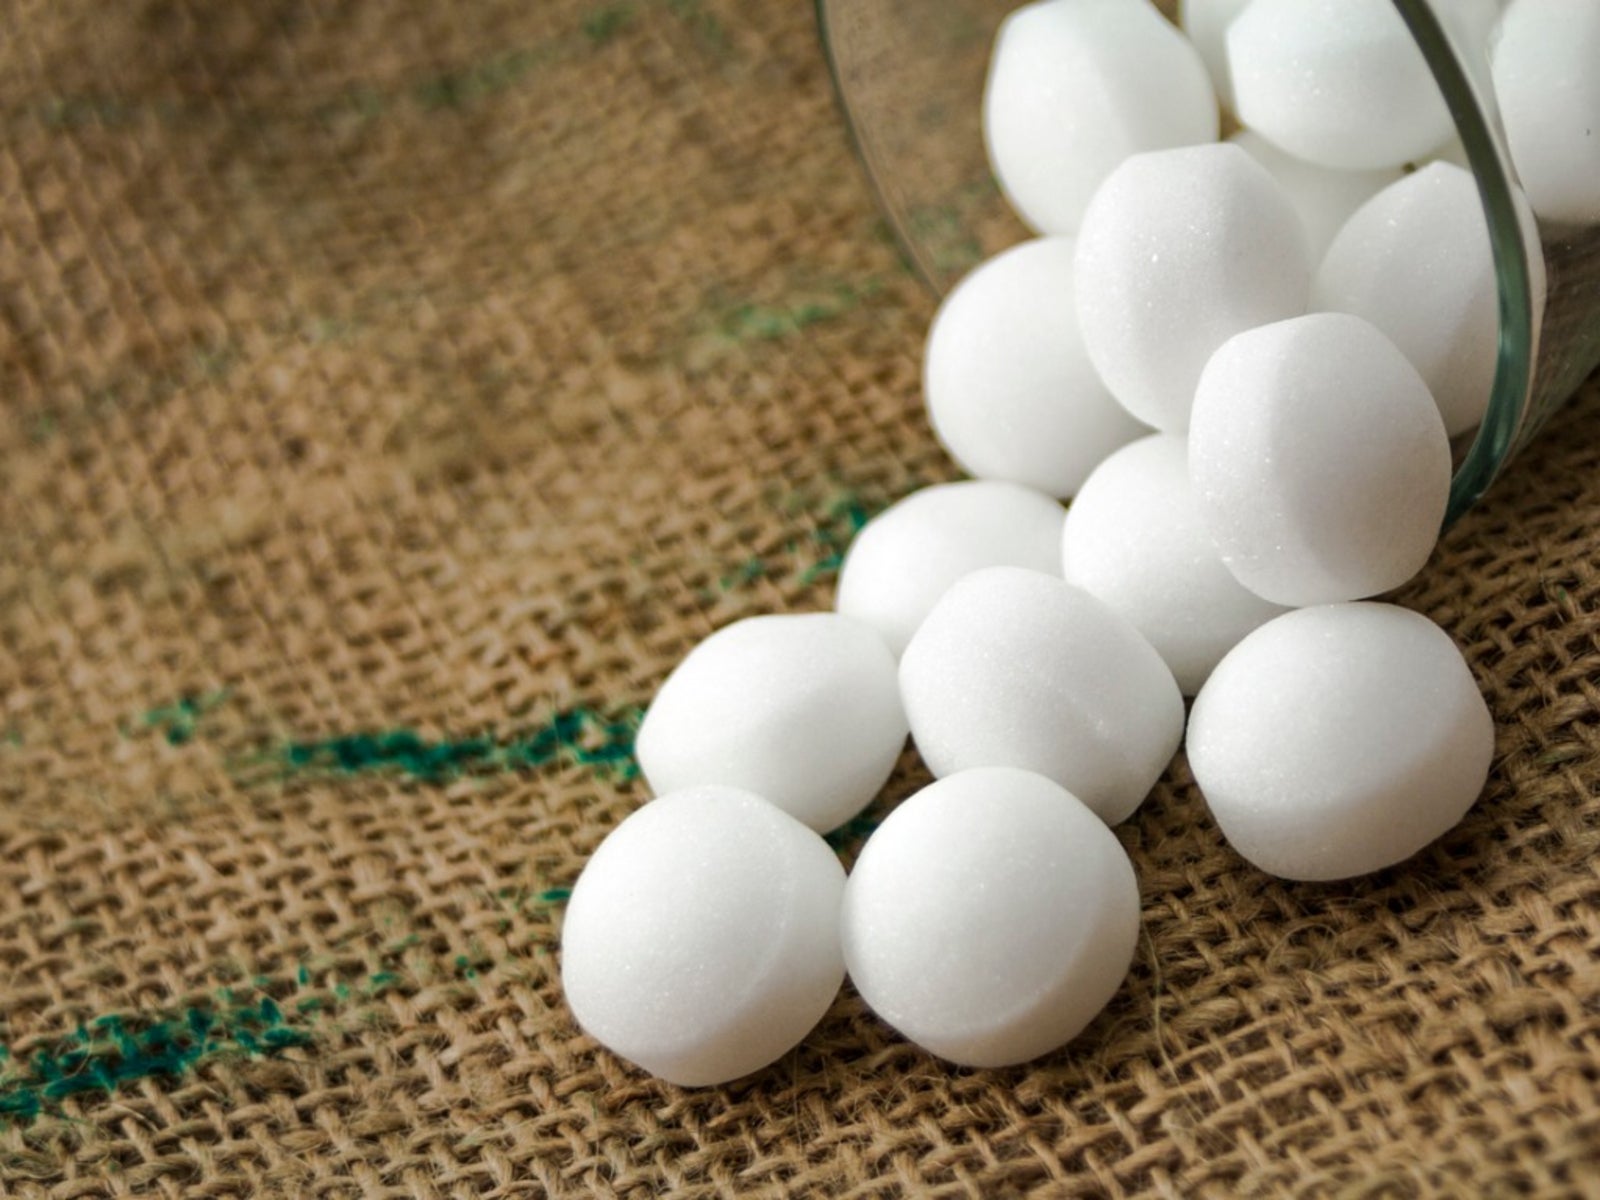 Mothball Hazards - Dangers In Using Mothballs To Repel Pests